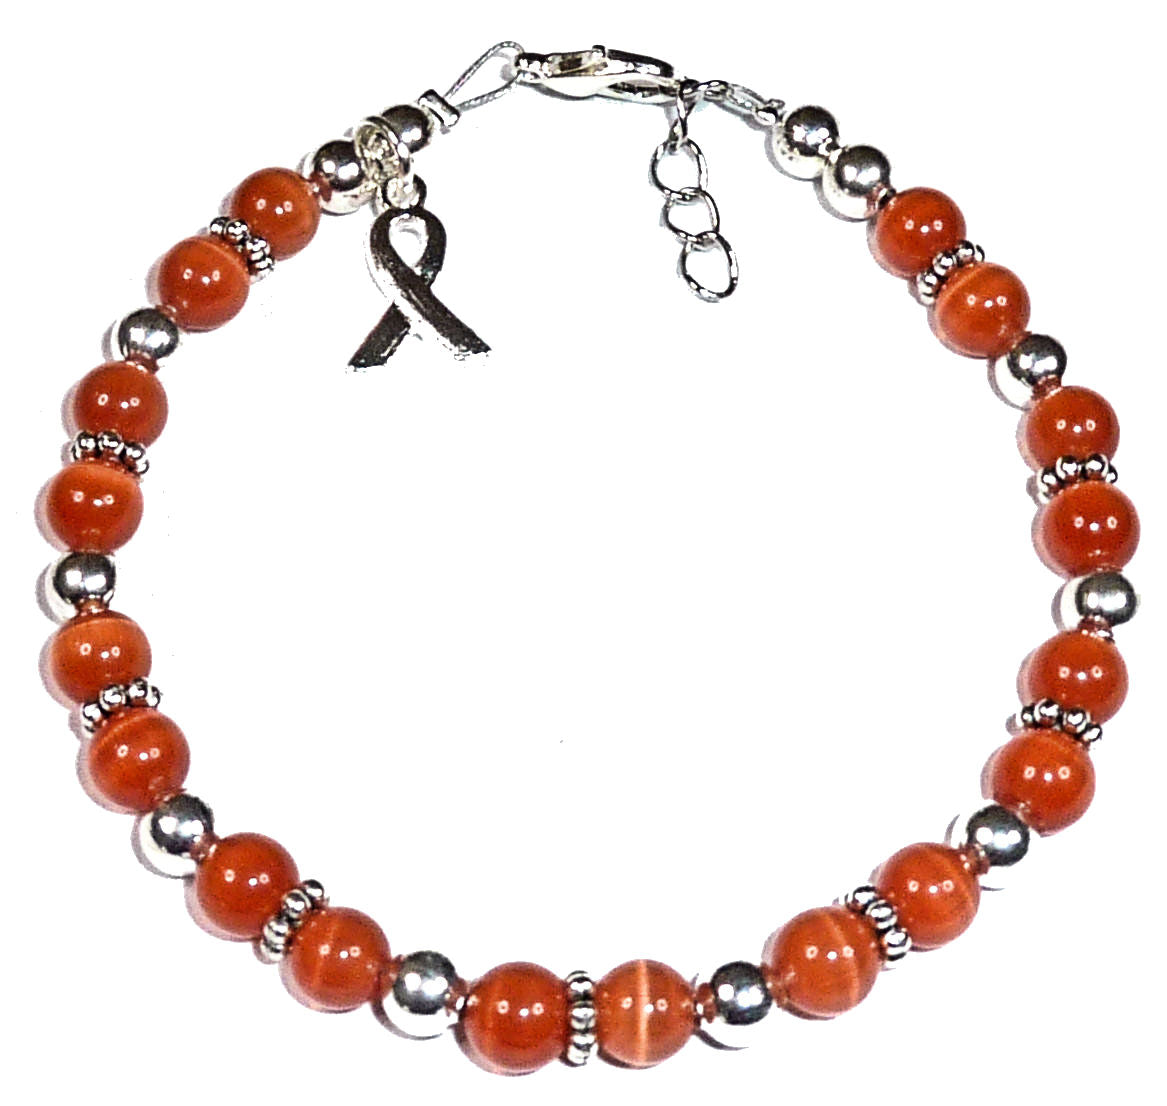 Orange (Leukemia) Packaged Cancer Awareness Bracelet 6mm